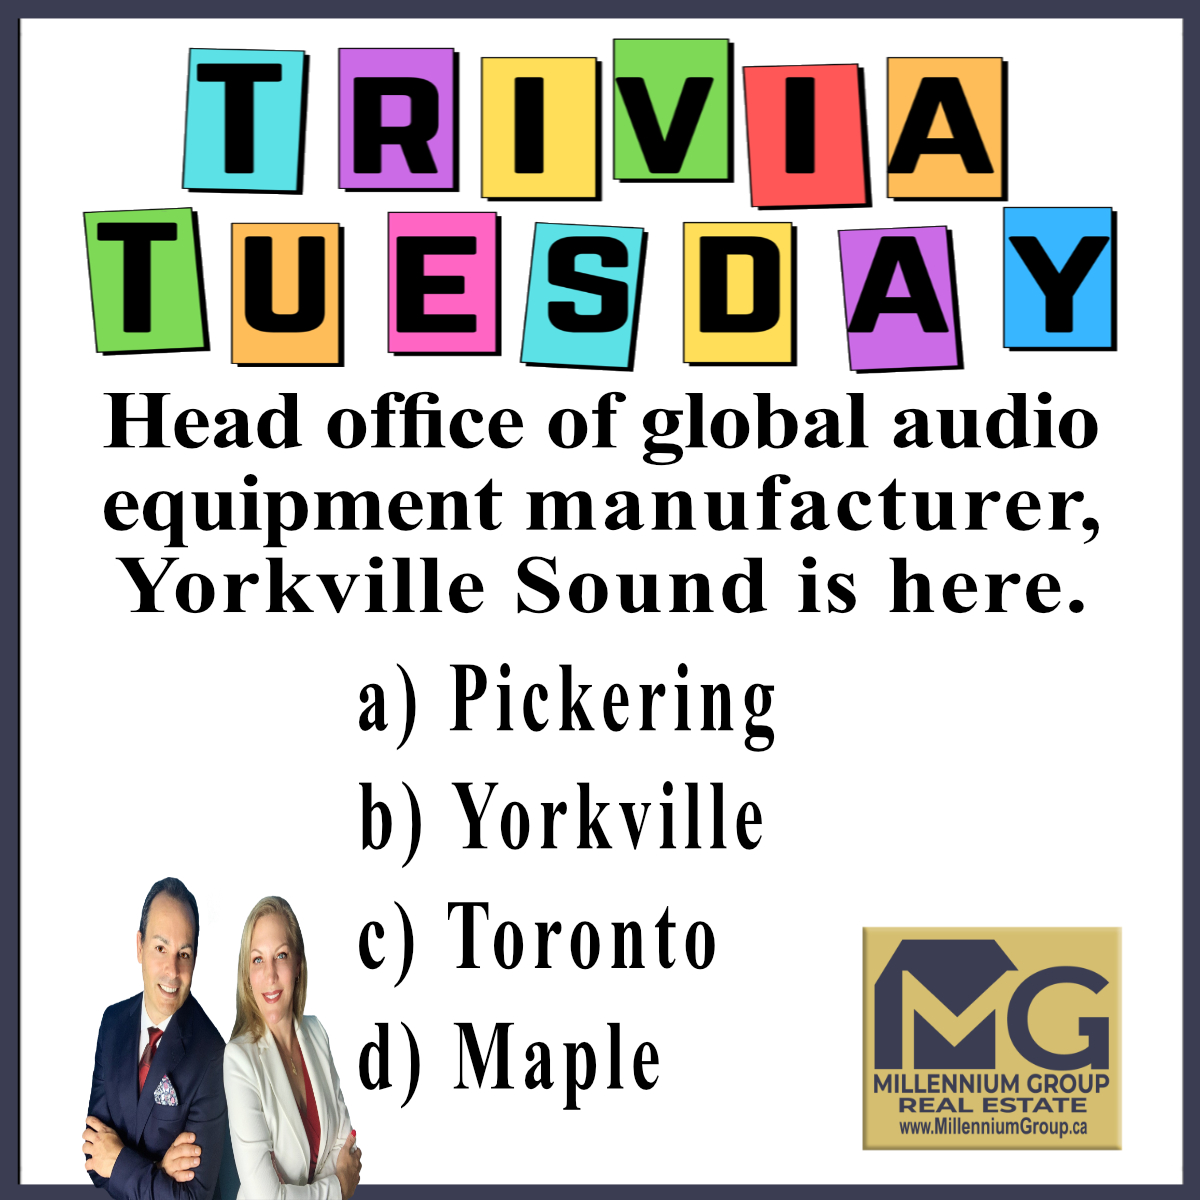 Any serious musician shopping at Long & McQuade knows the Yorkville Sound brand name 🎶

#YorkvilleSound #Long-McQuade #CanadianMusic #MadeInCanada #TuesdayTrivia #TriviaTuesday #NeighbourhoodTrivia #OntarioTrivia #TorontoTrivia #MusicTrivia #MillenniumGroupRealEstate #MGRE